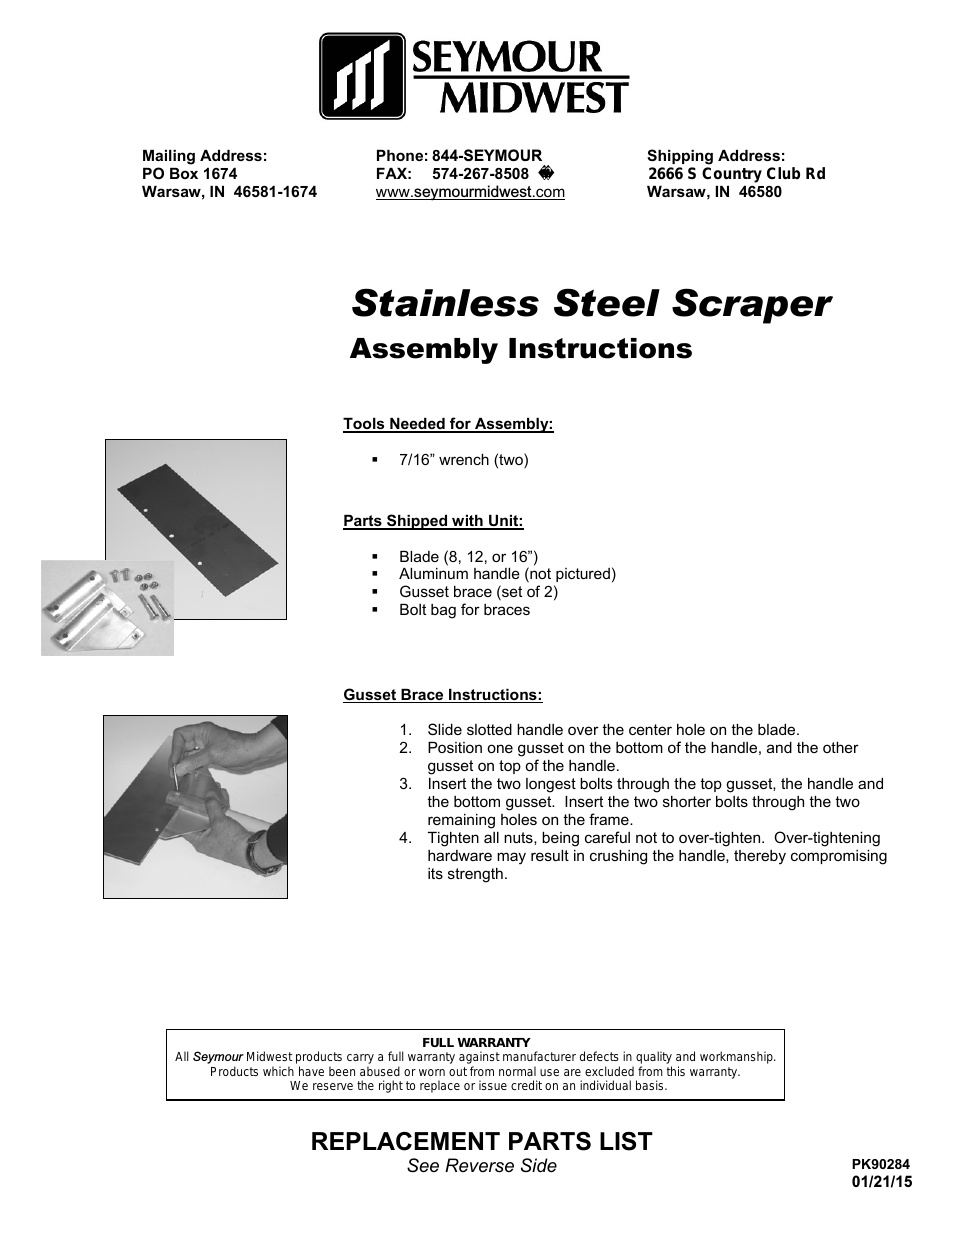 Stainless Steel Scraper(PK90284)